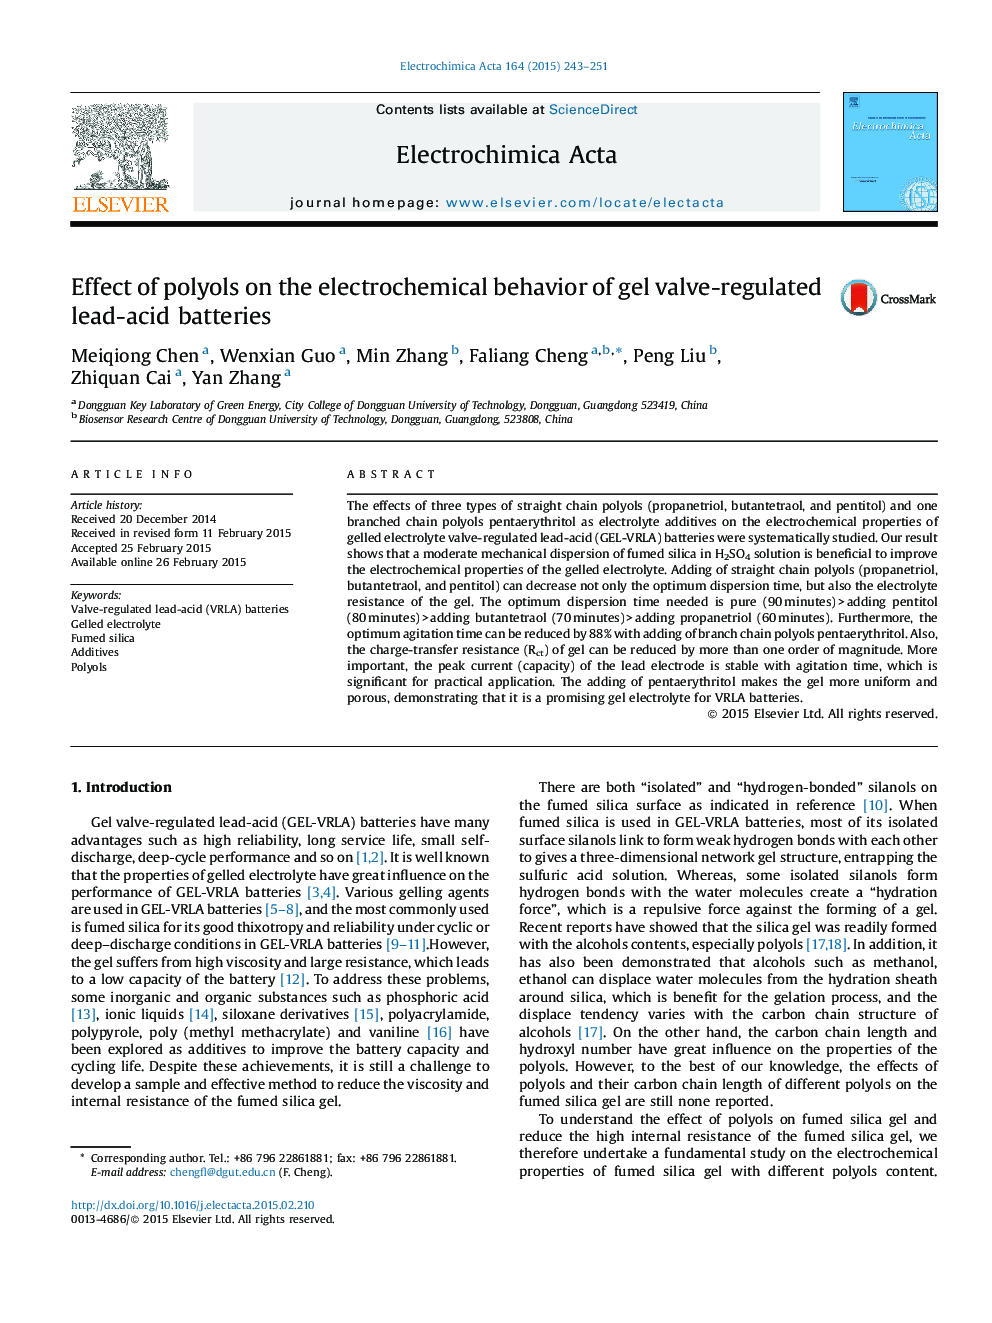 Effect of polyols on the electrochemical behavior of gel valve-regulated lead-acid batteries